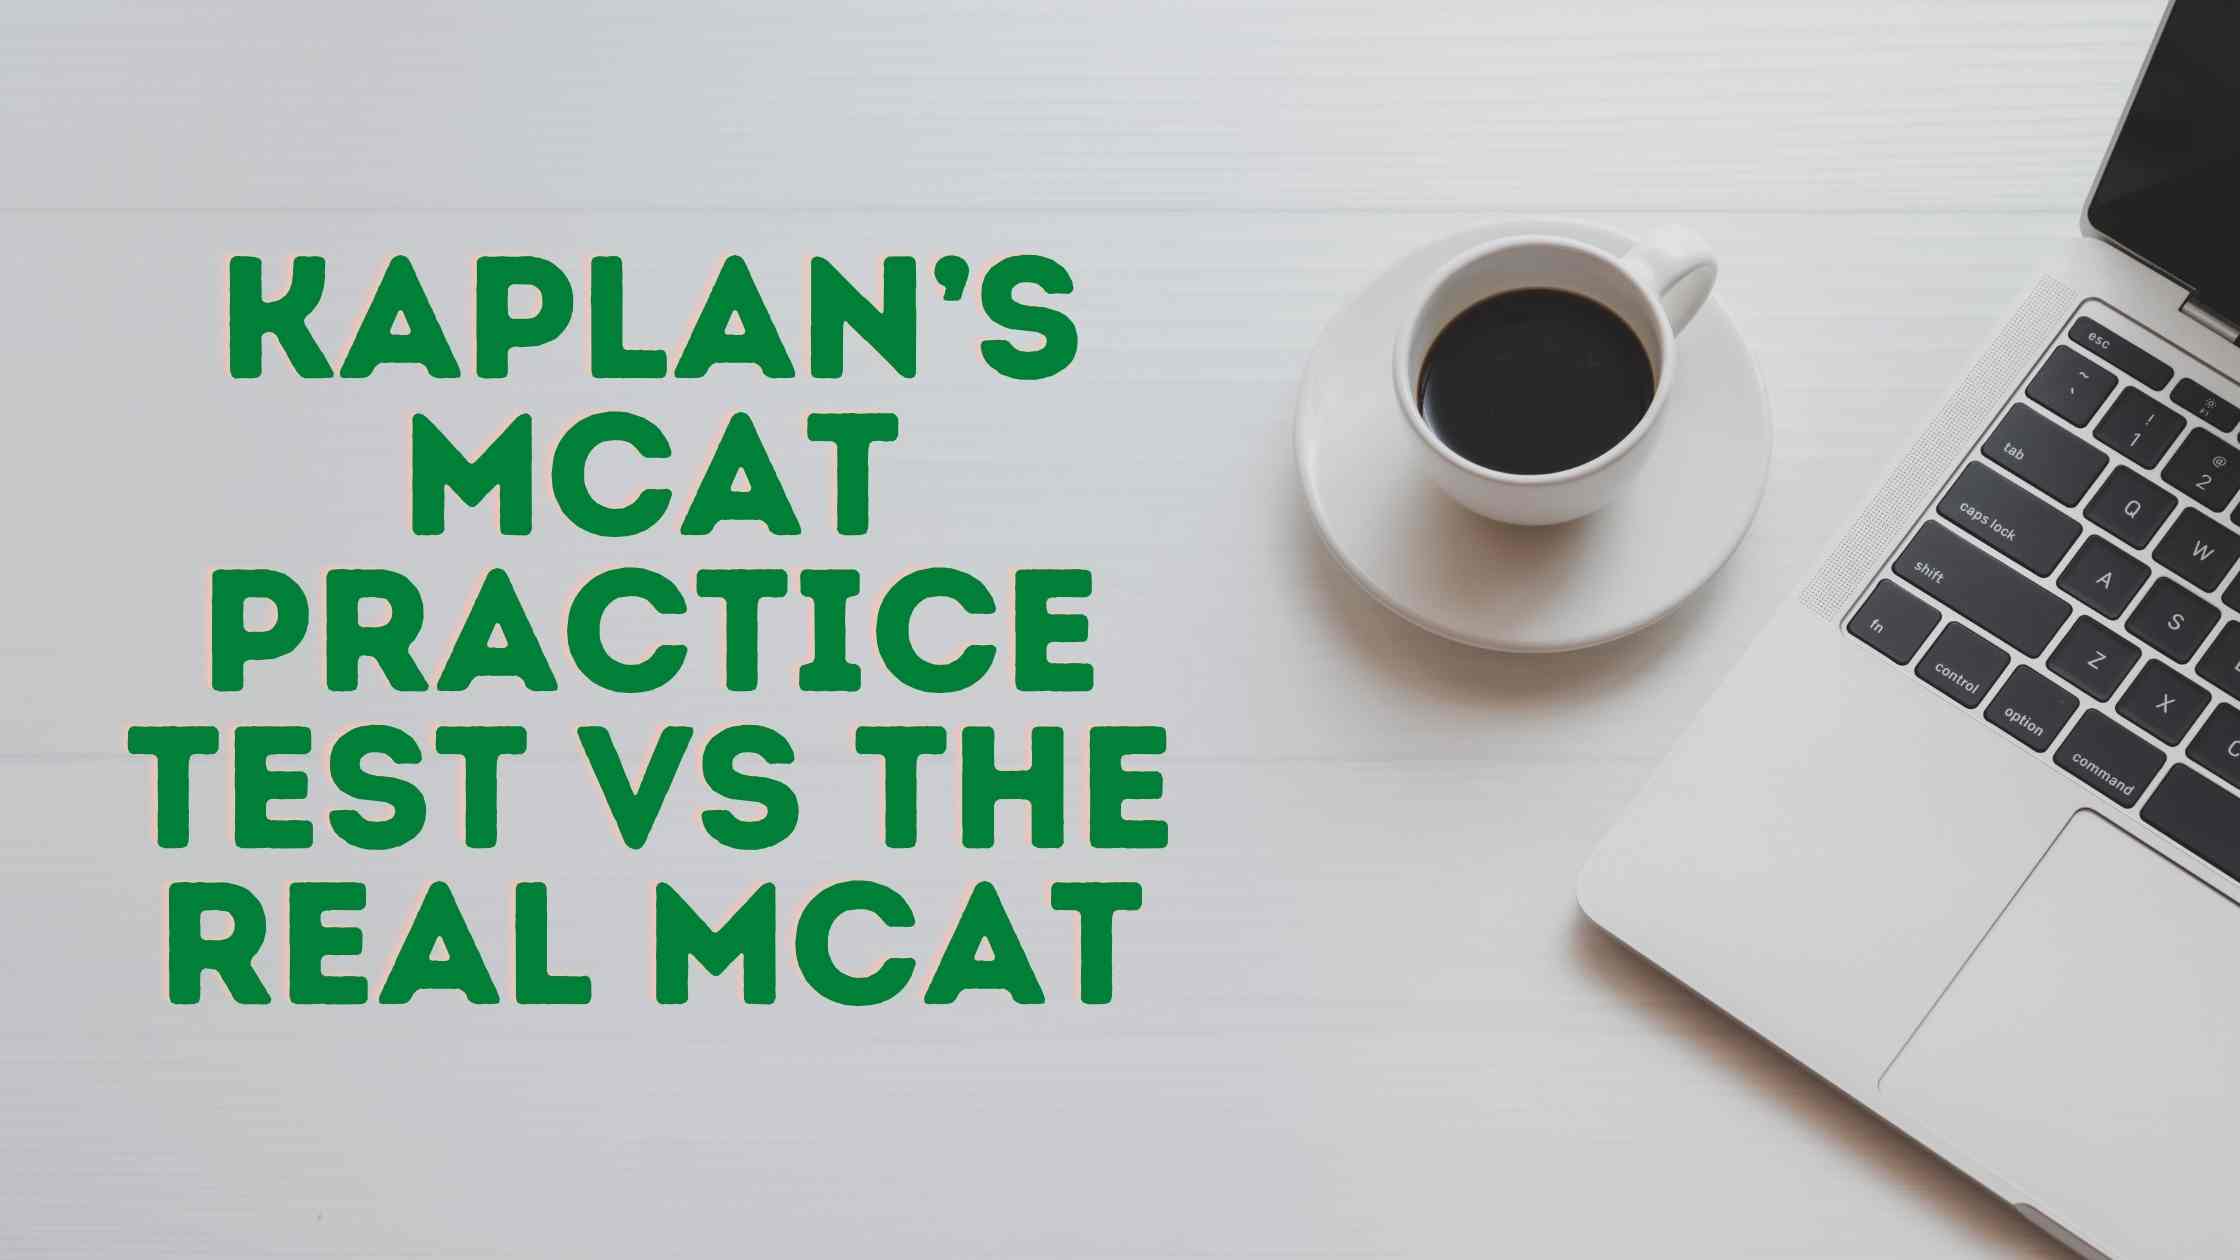 Kaplan’s MCAT Practice Test Vs The Real MCAT